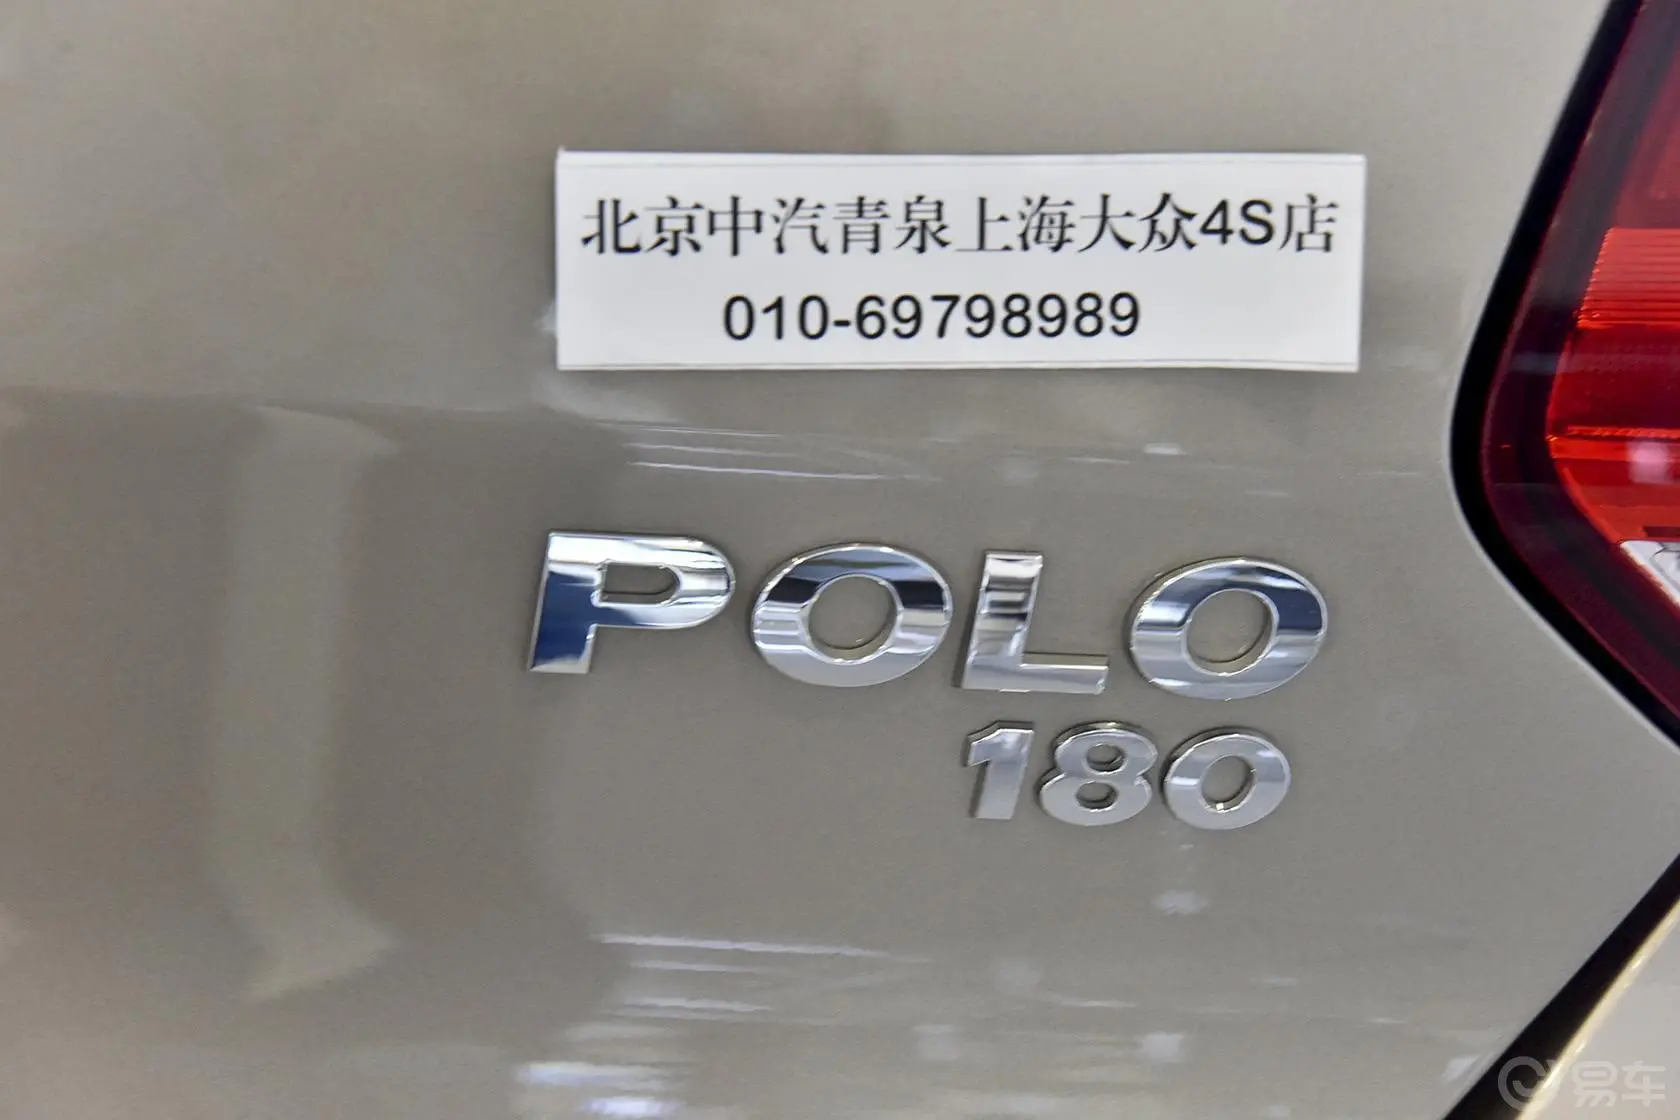 Polo1.6L 手动 舒适版尾标